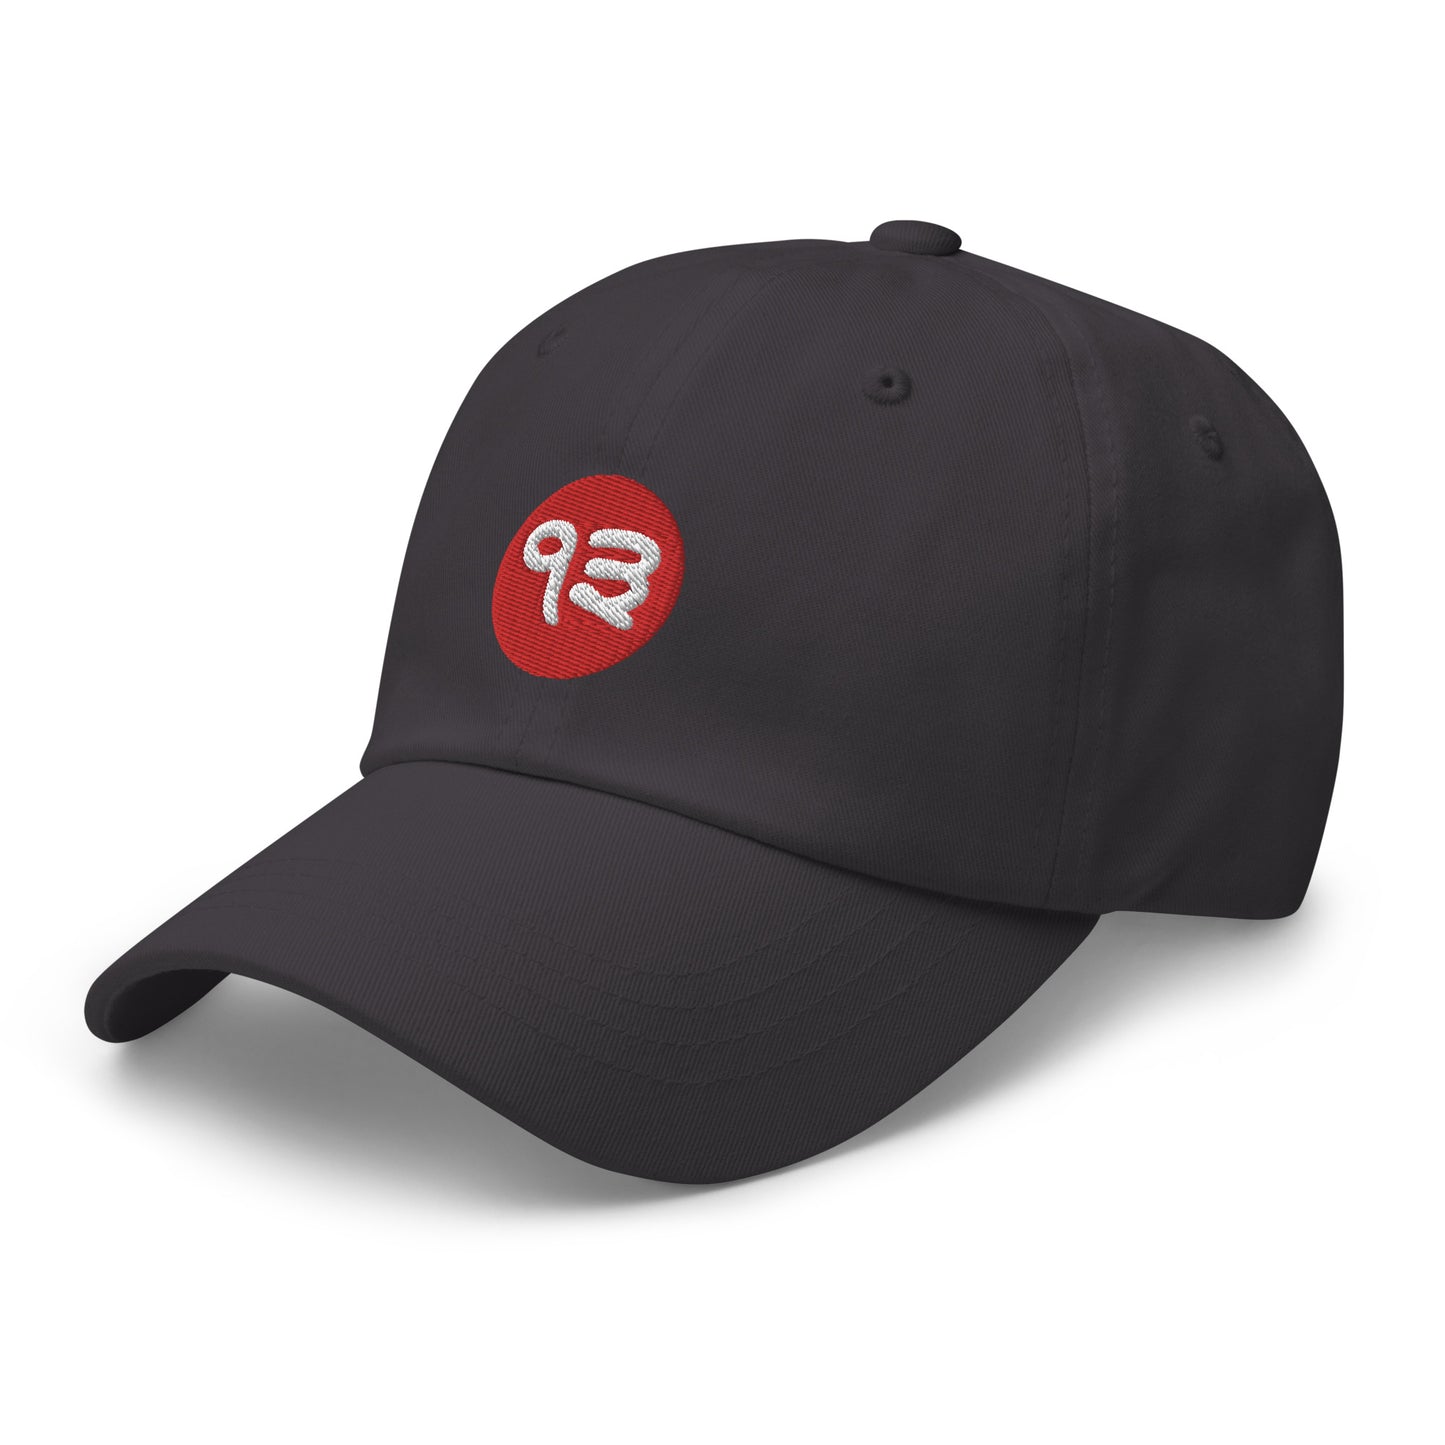 S13 DAD HAT